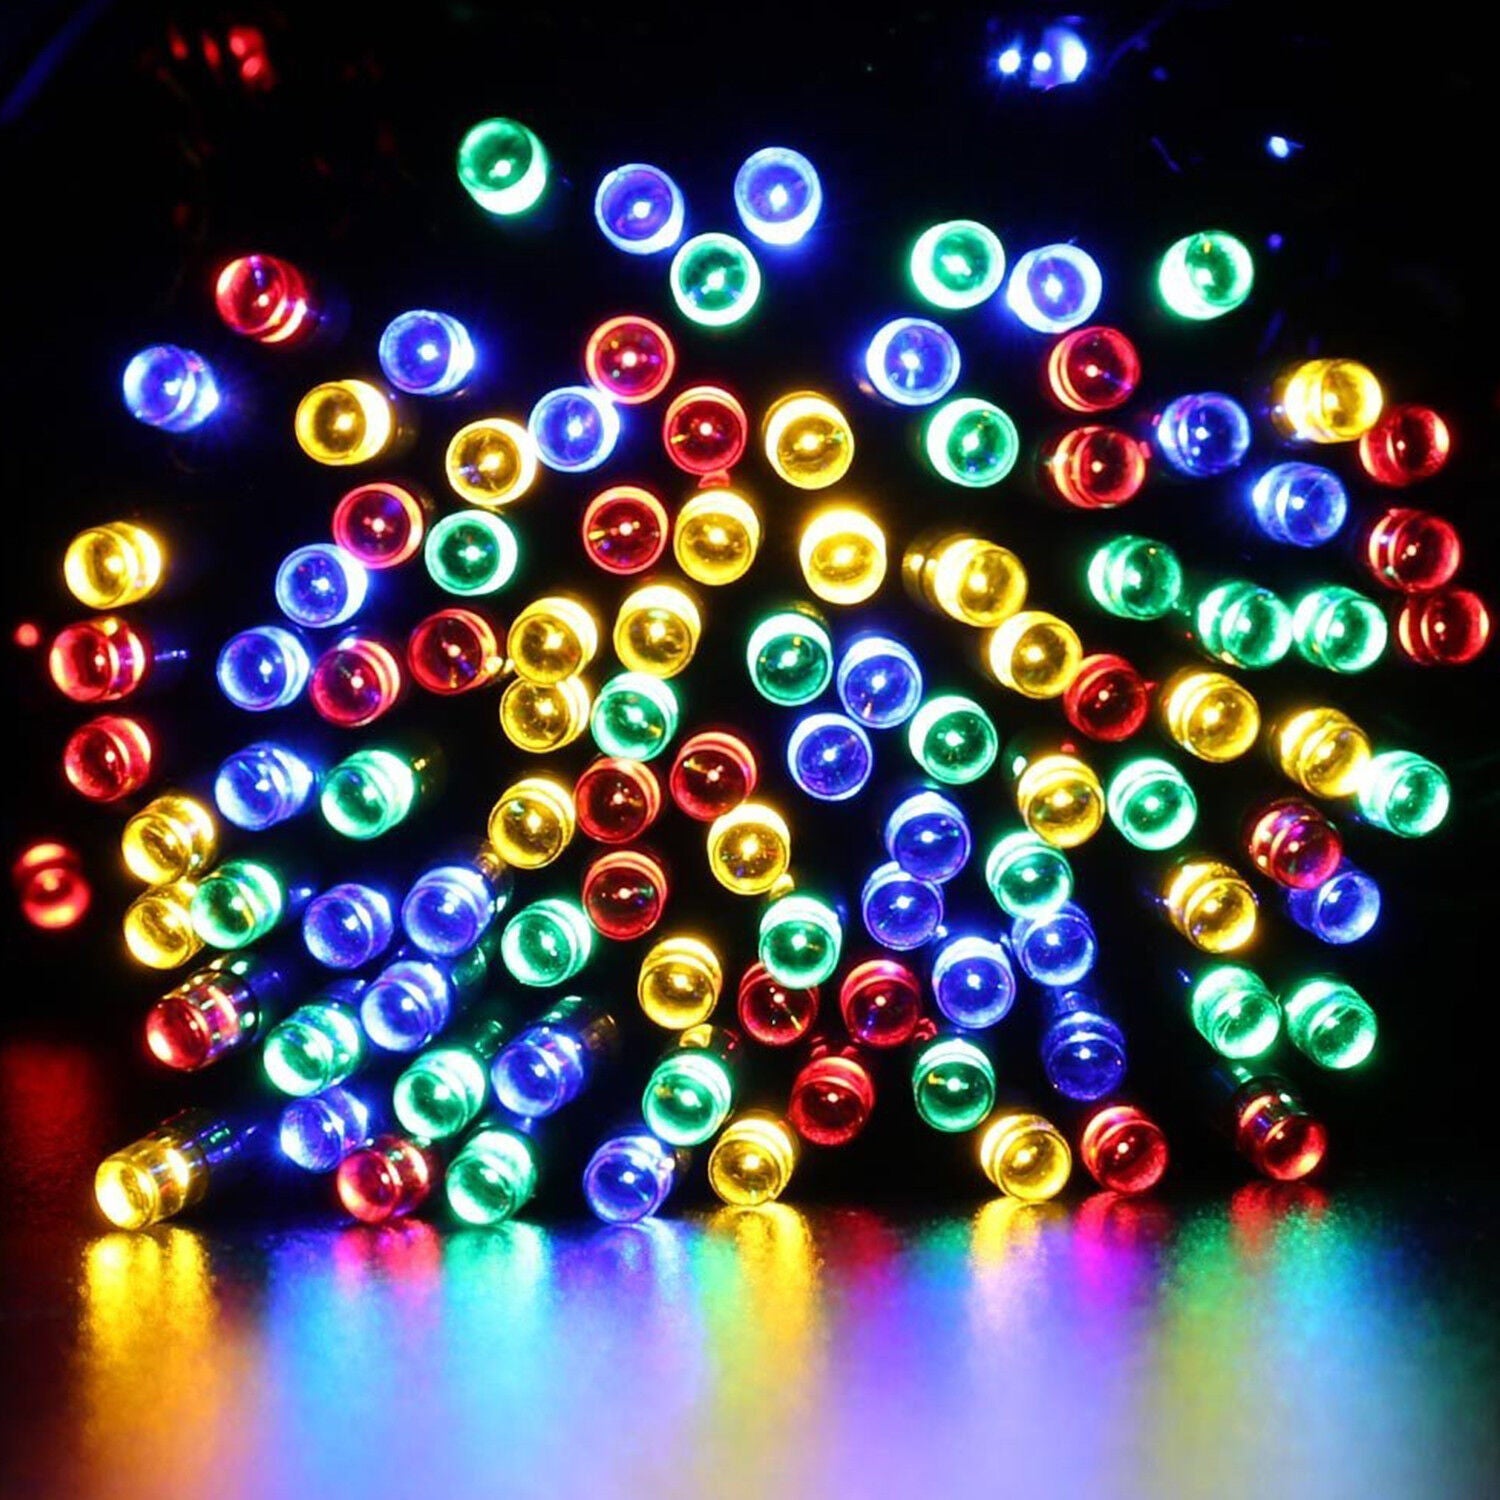 Solar Fairy String Led Lights 12M-32M Outdoor Garden Christmas Party Decor(22M200Led)